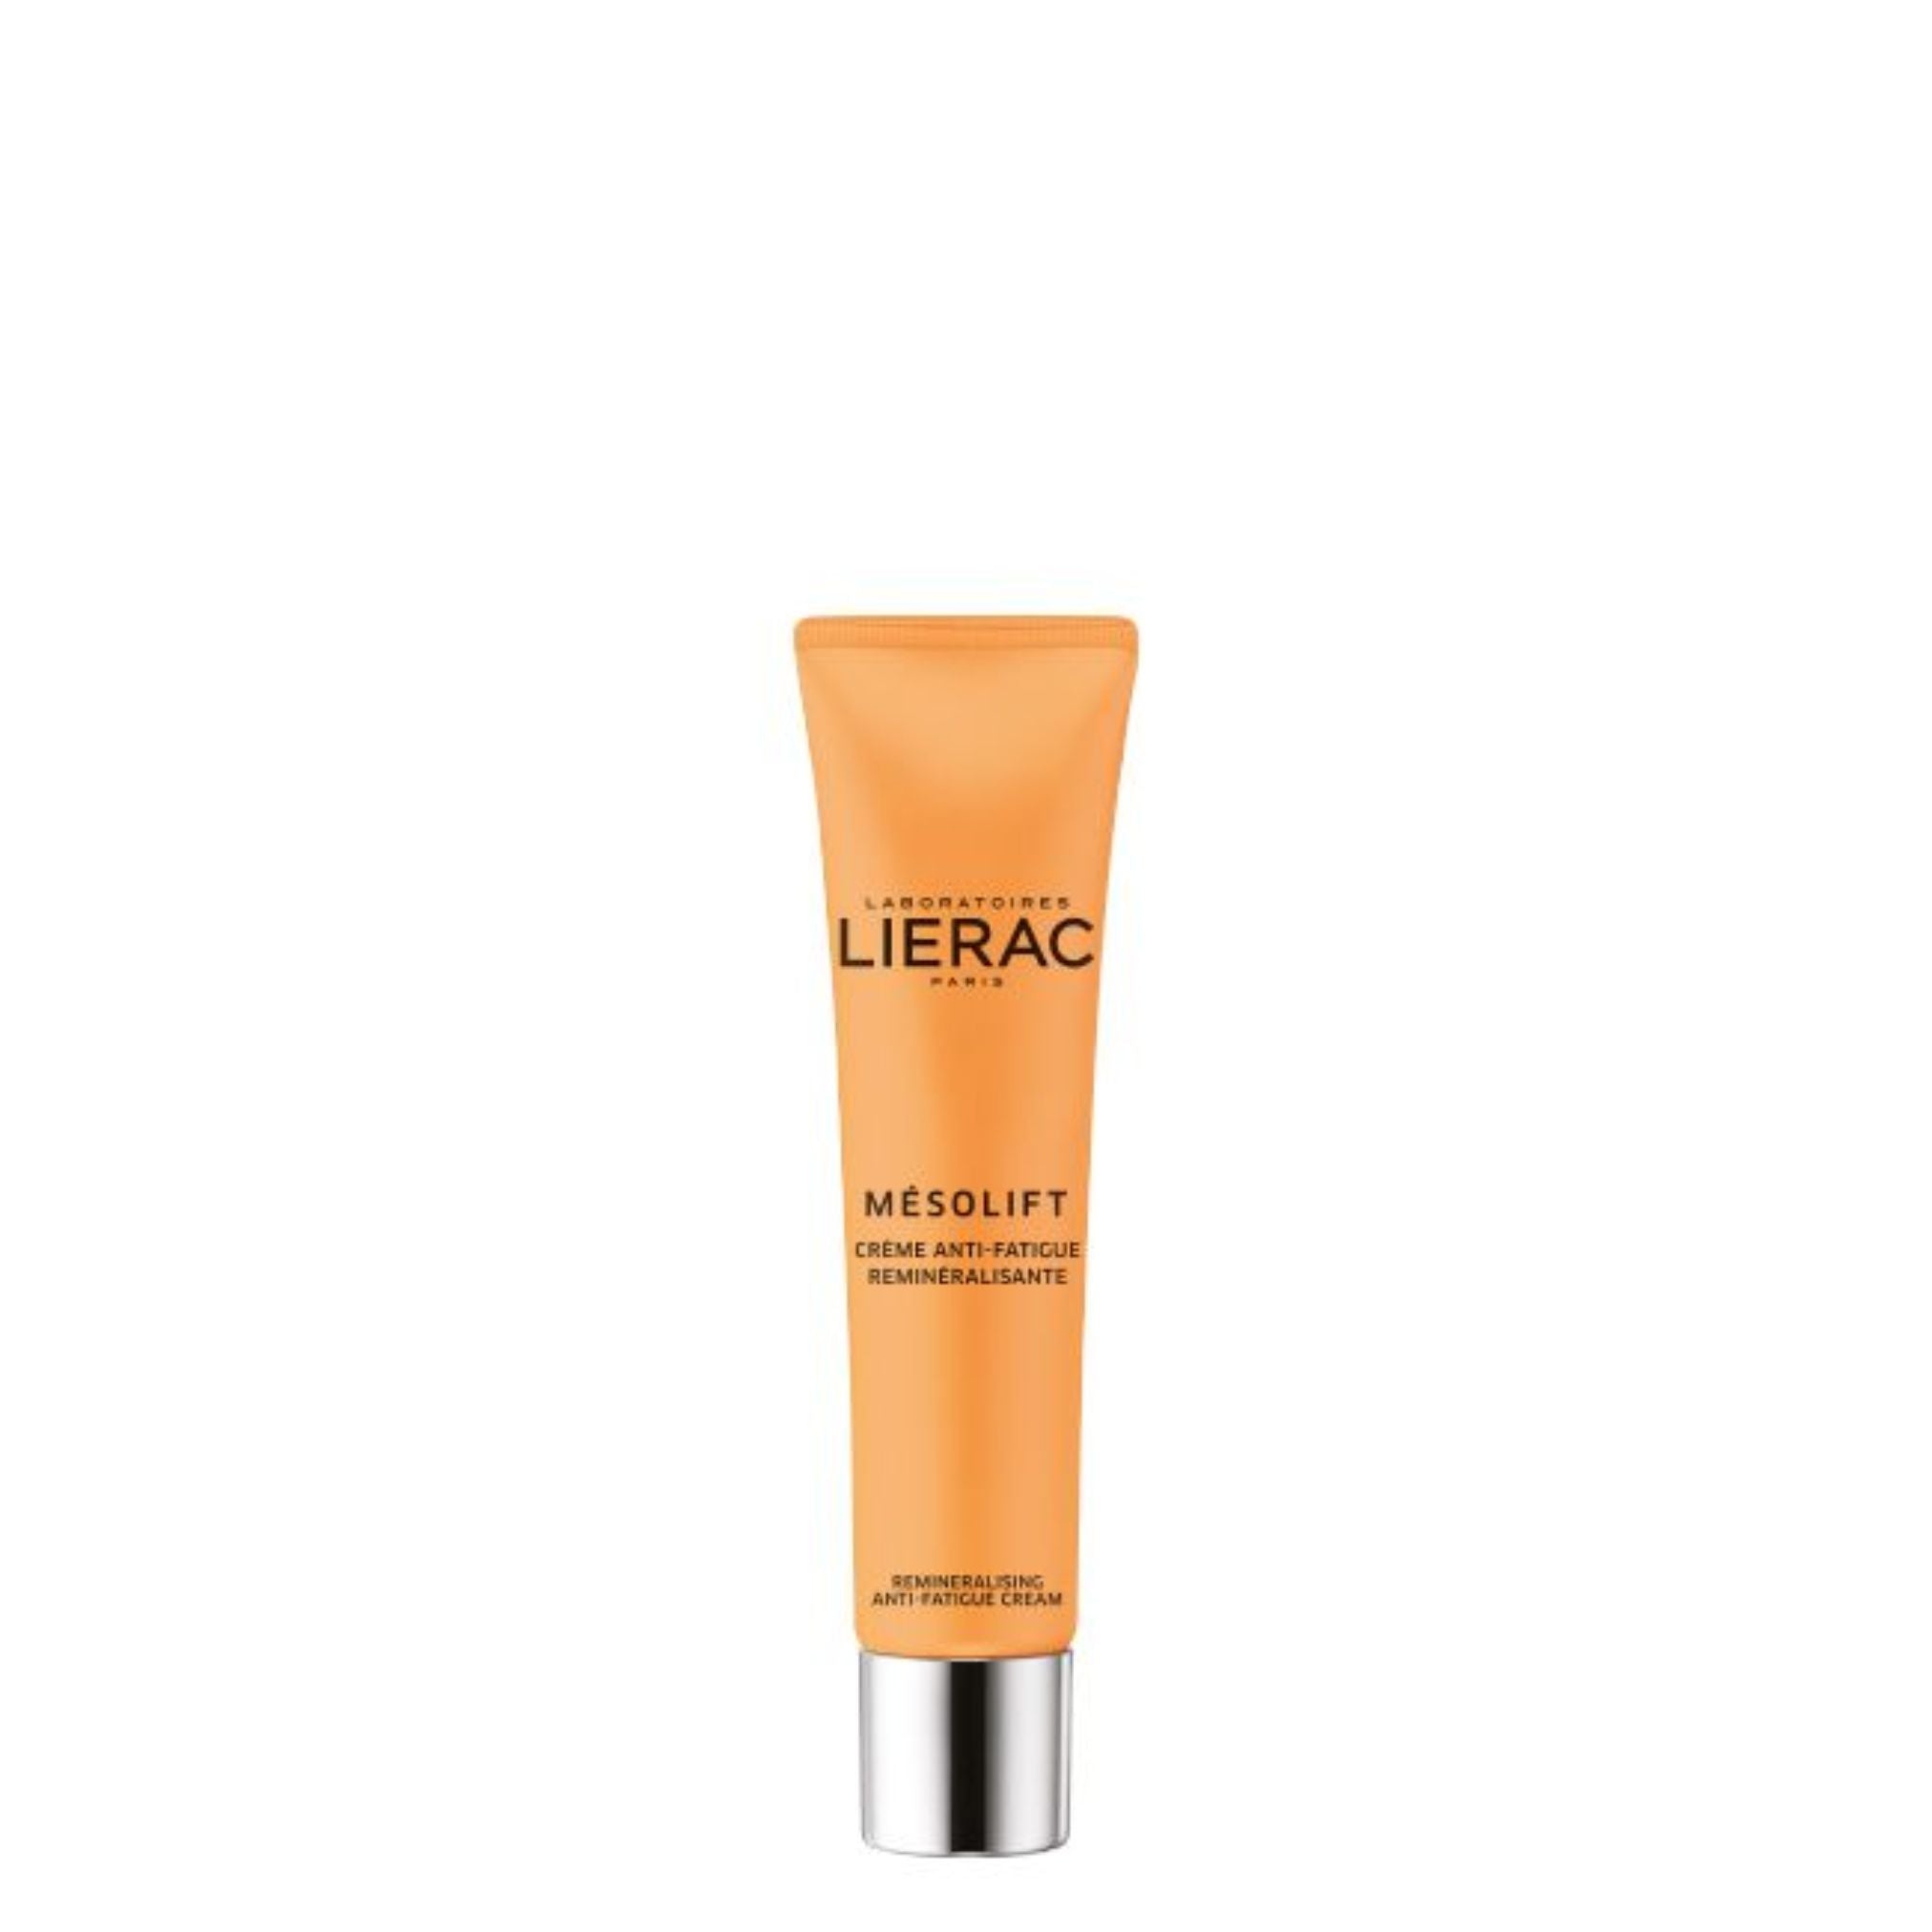 Lierac Mésolift Remineralizing Anti-Fatigue Cream 40ml